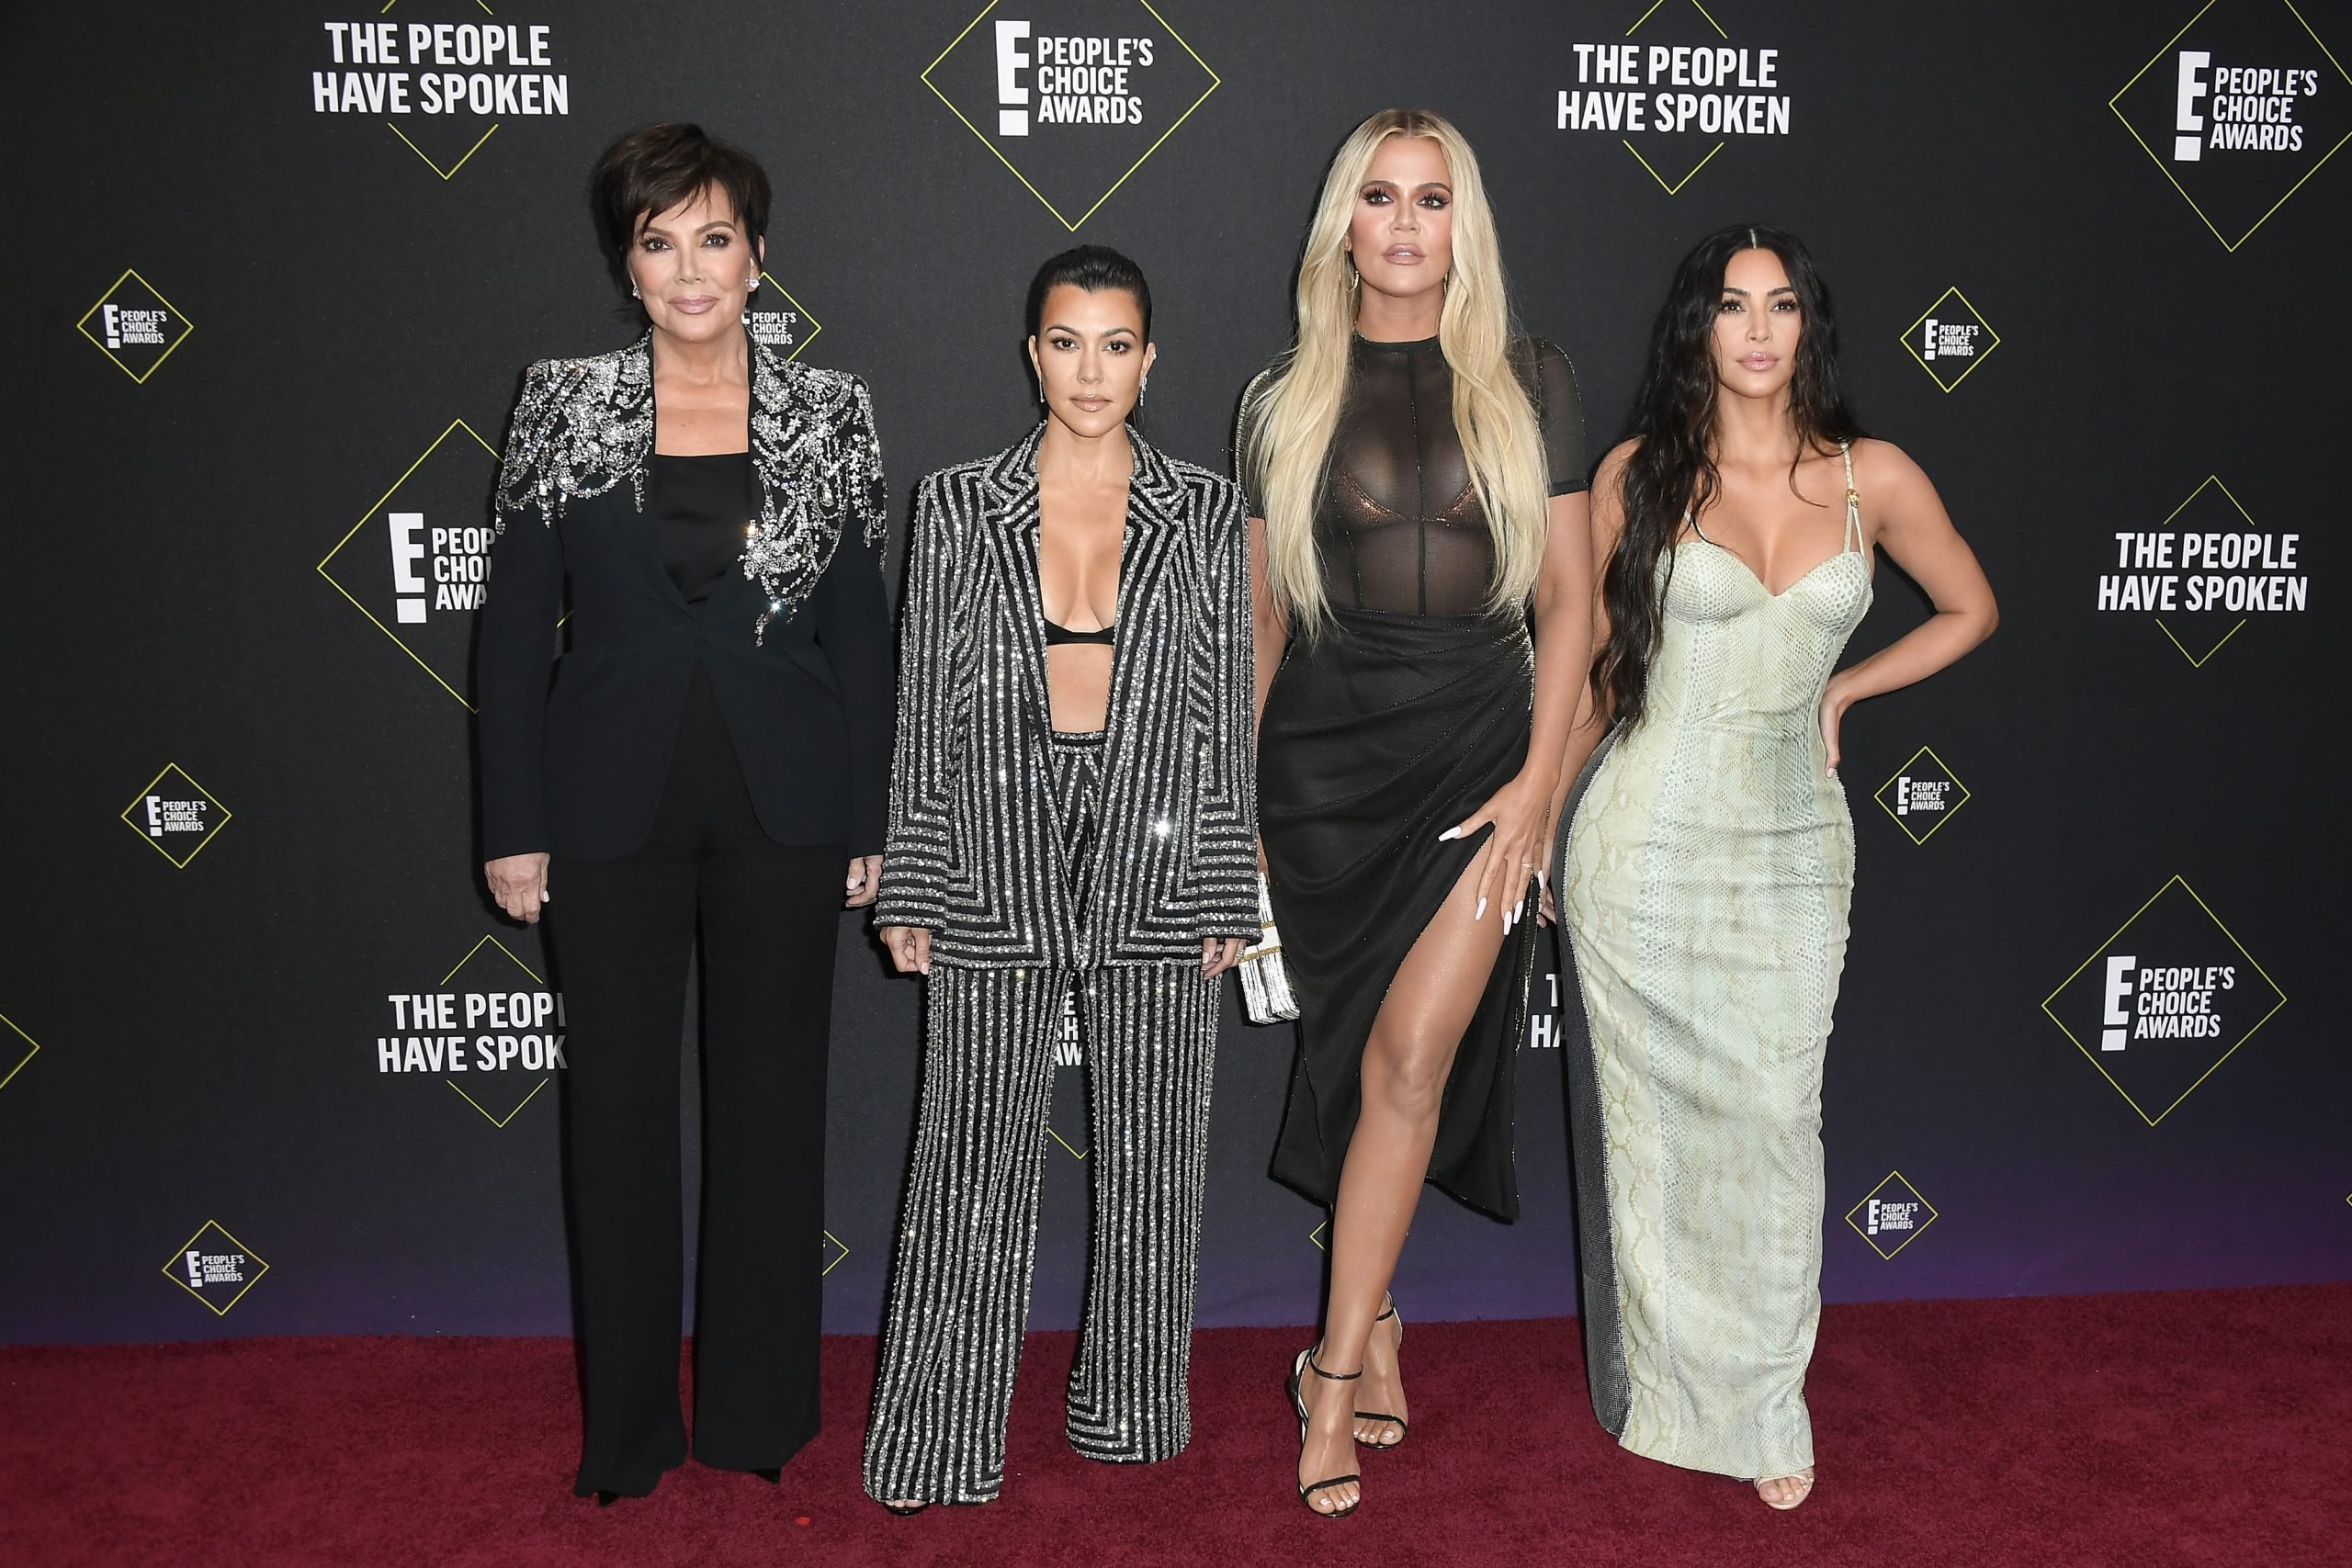 Kardashian sisters and Kris Jenner